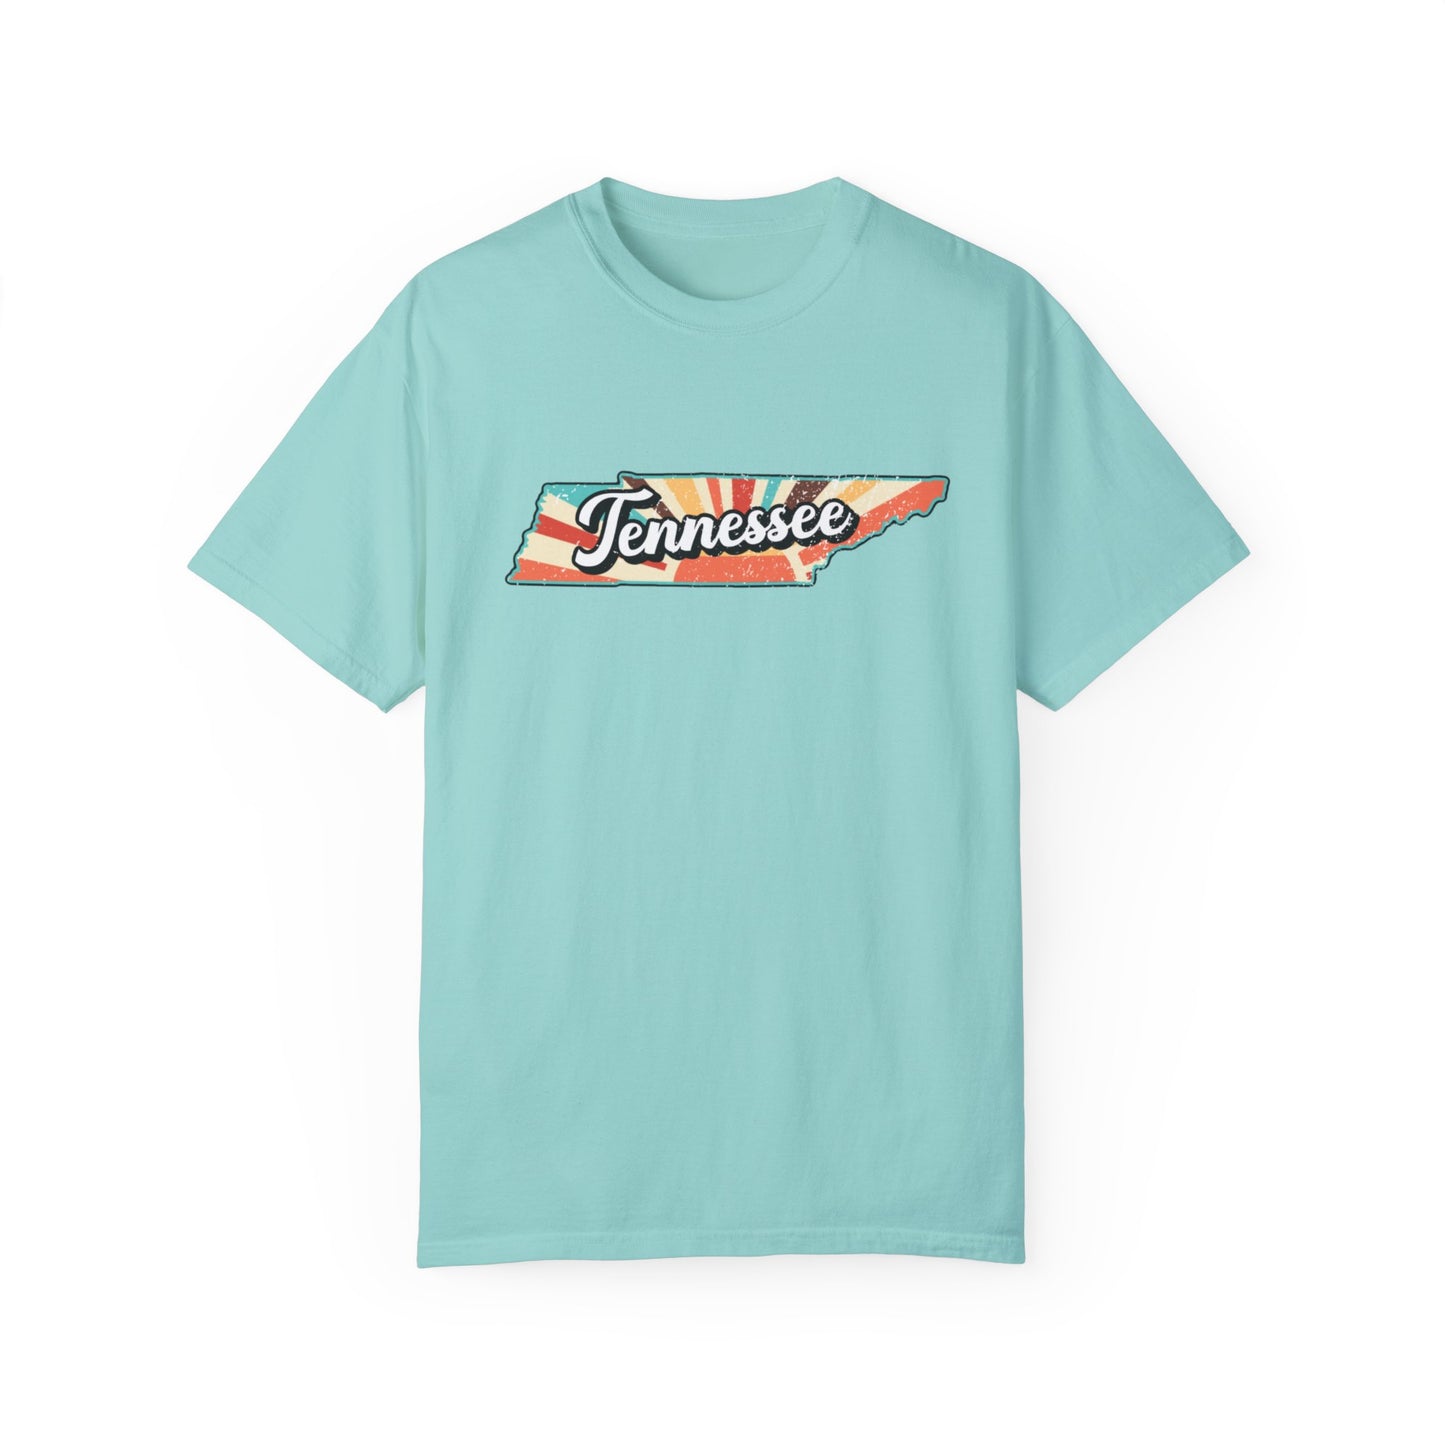 Retro Tennessee Comfort Colors Tshirt